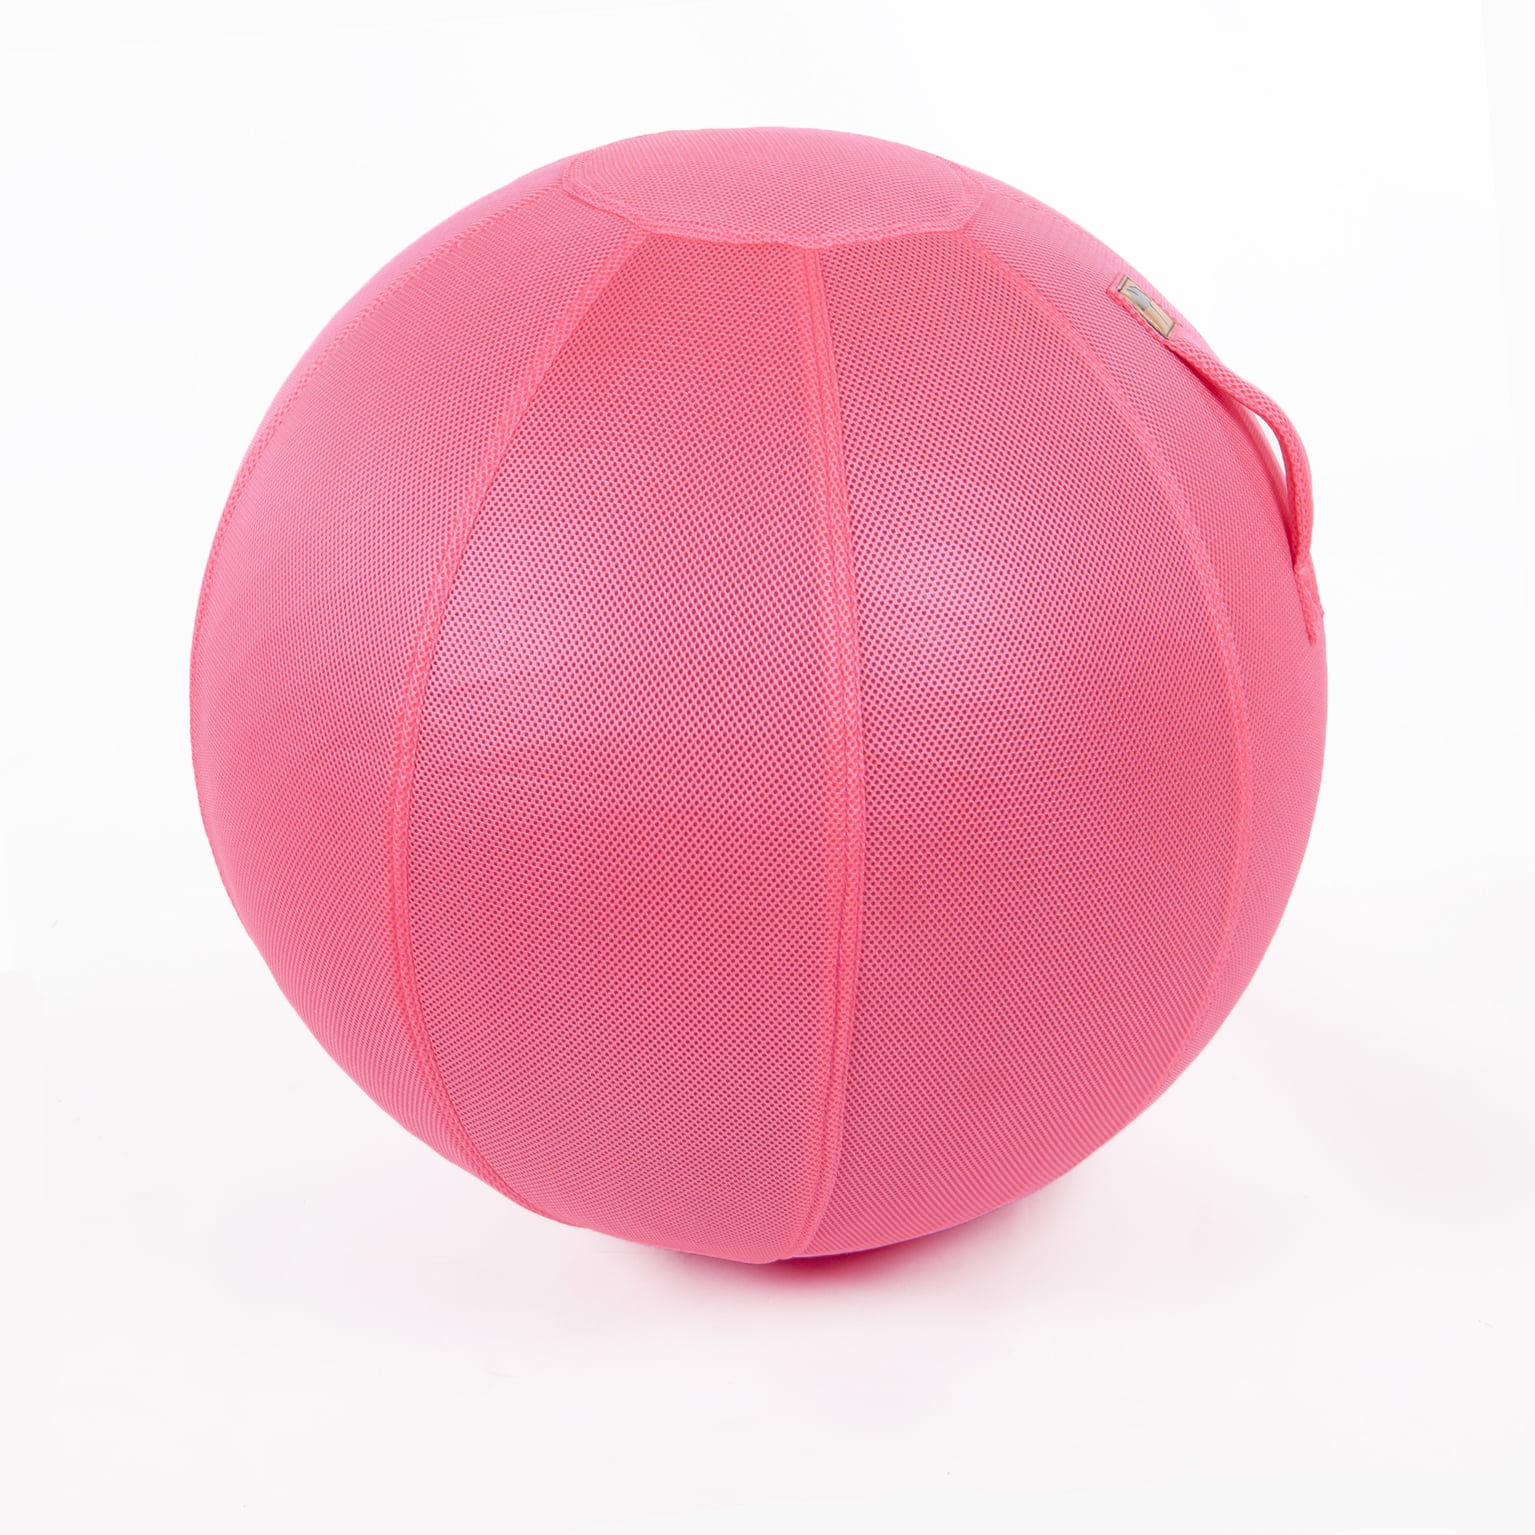 Zen Ball Mesh Pink Neon